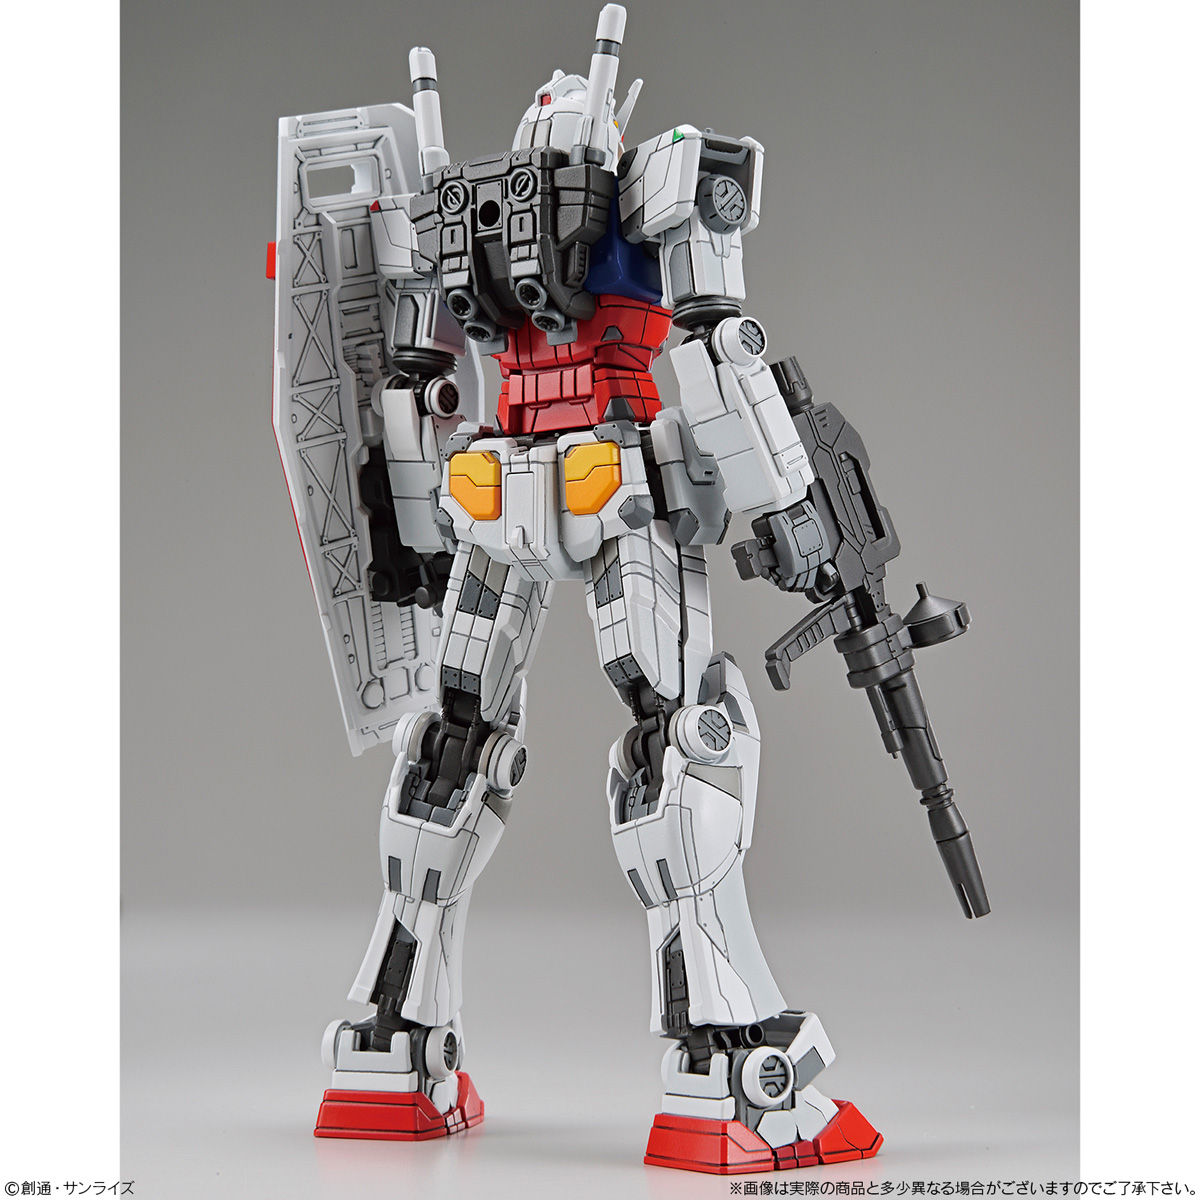 1/144 Scale Model RX-78F00 Gundam